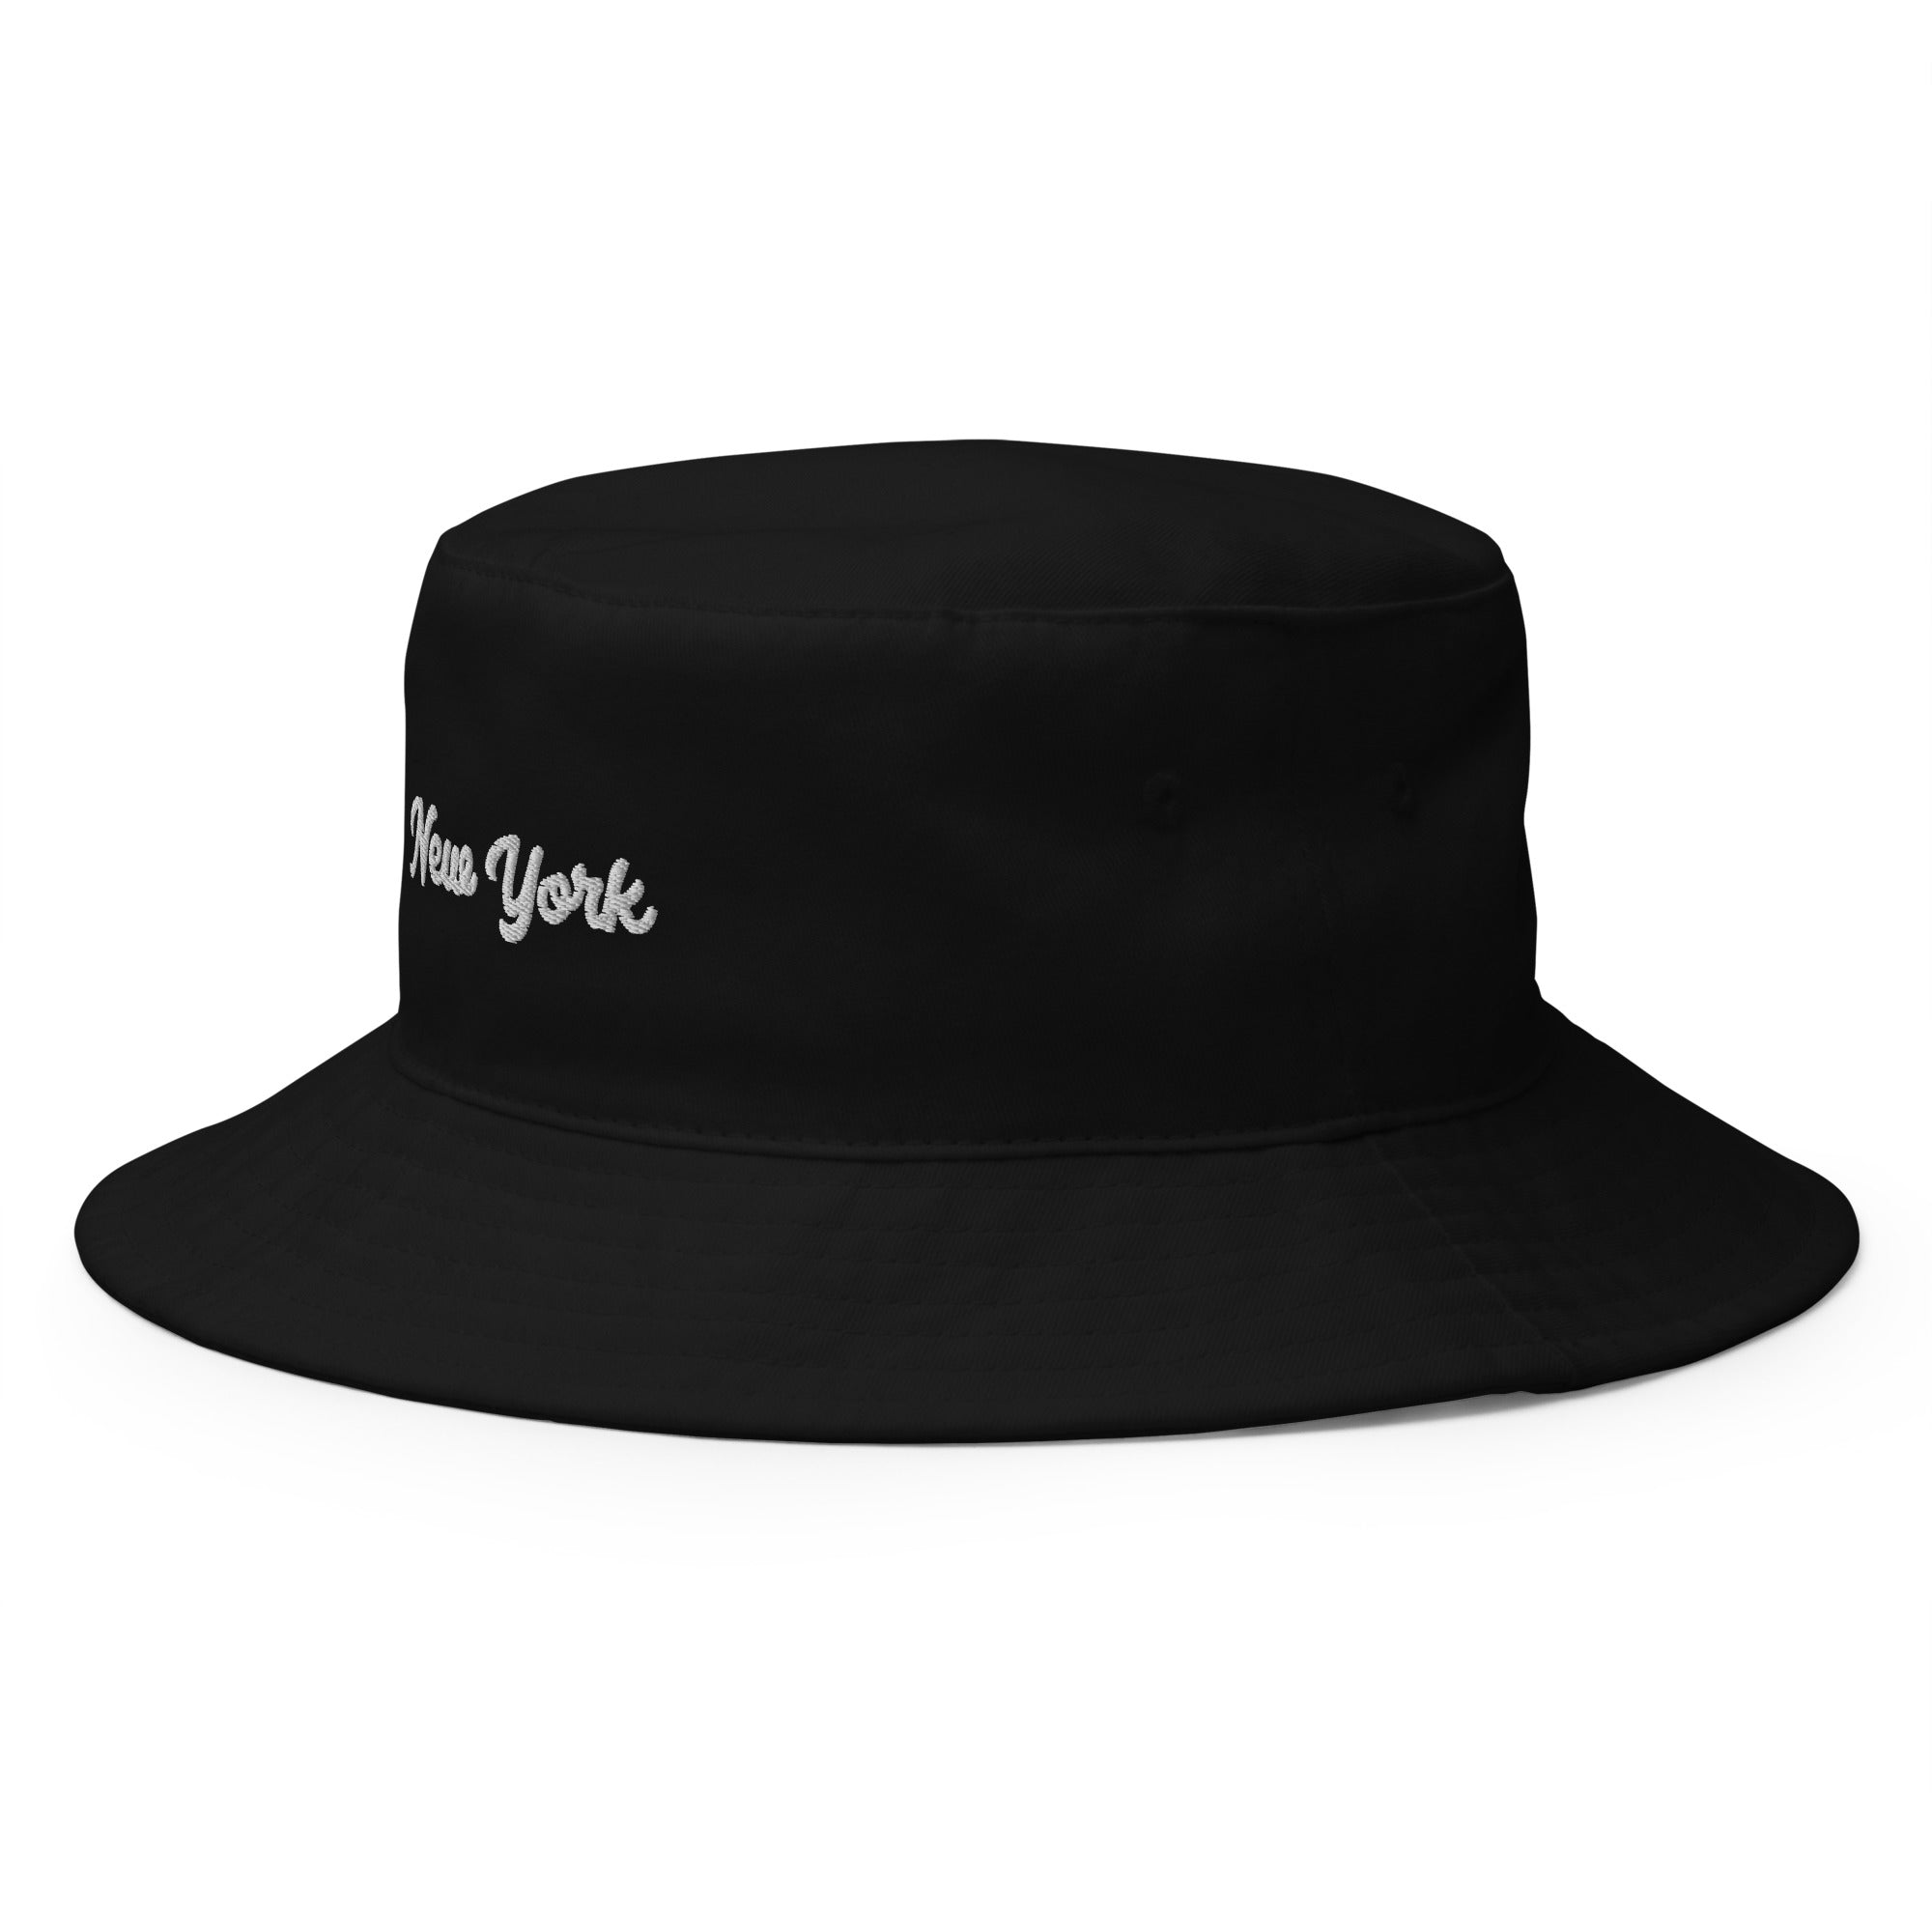 New York Bucket Hat